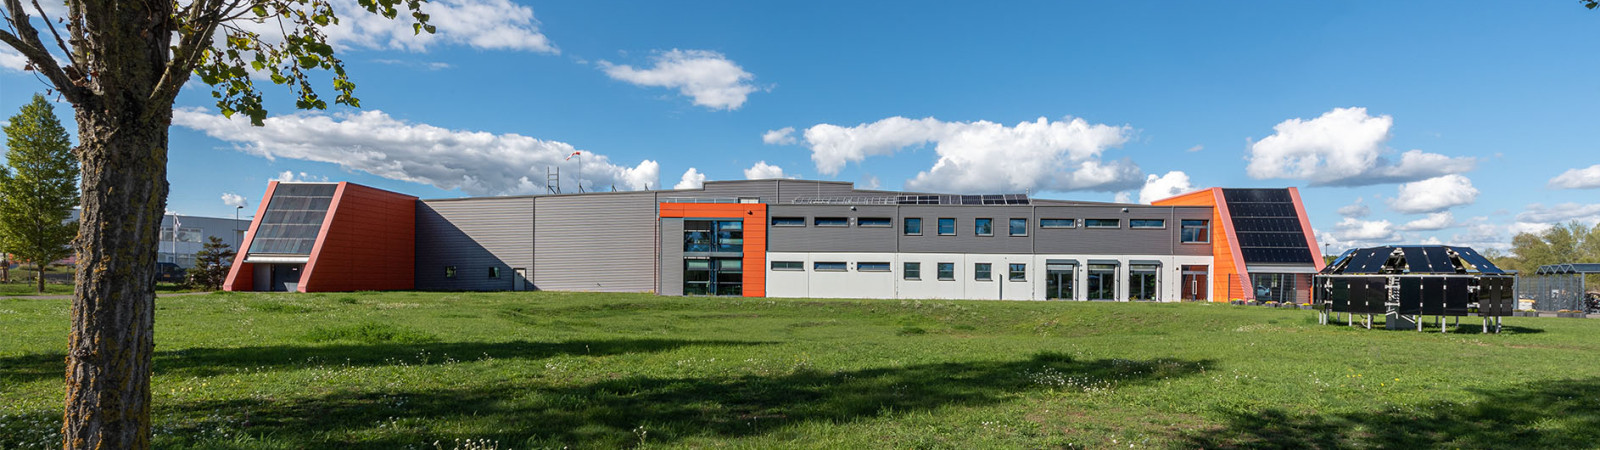 Brandenburg production facility